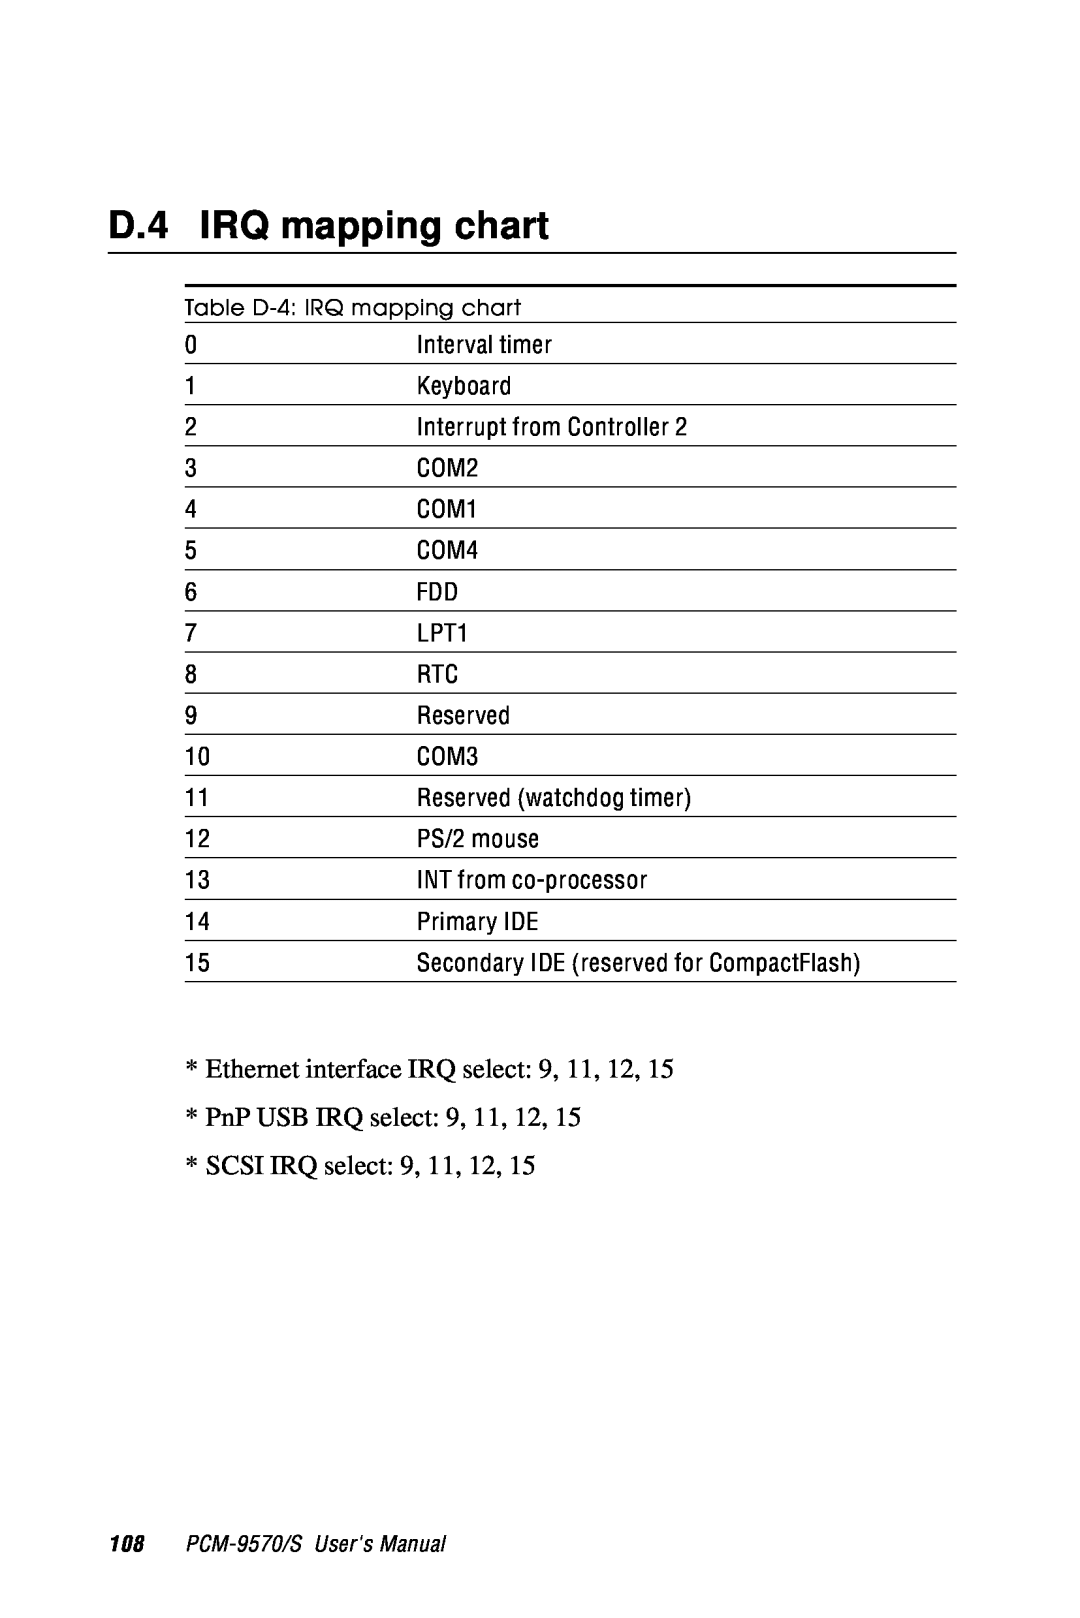 Advantech 2006957006 5th Edition user manual D.4 IRQ mapping chart, SCSI IRQ select 9, 11, 12 